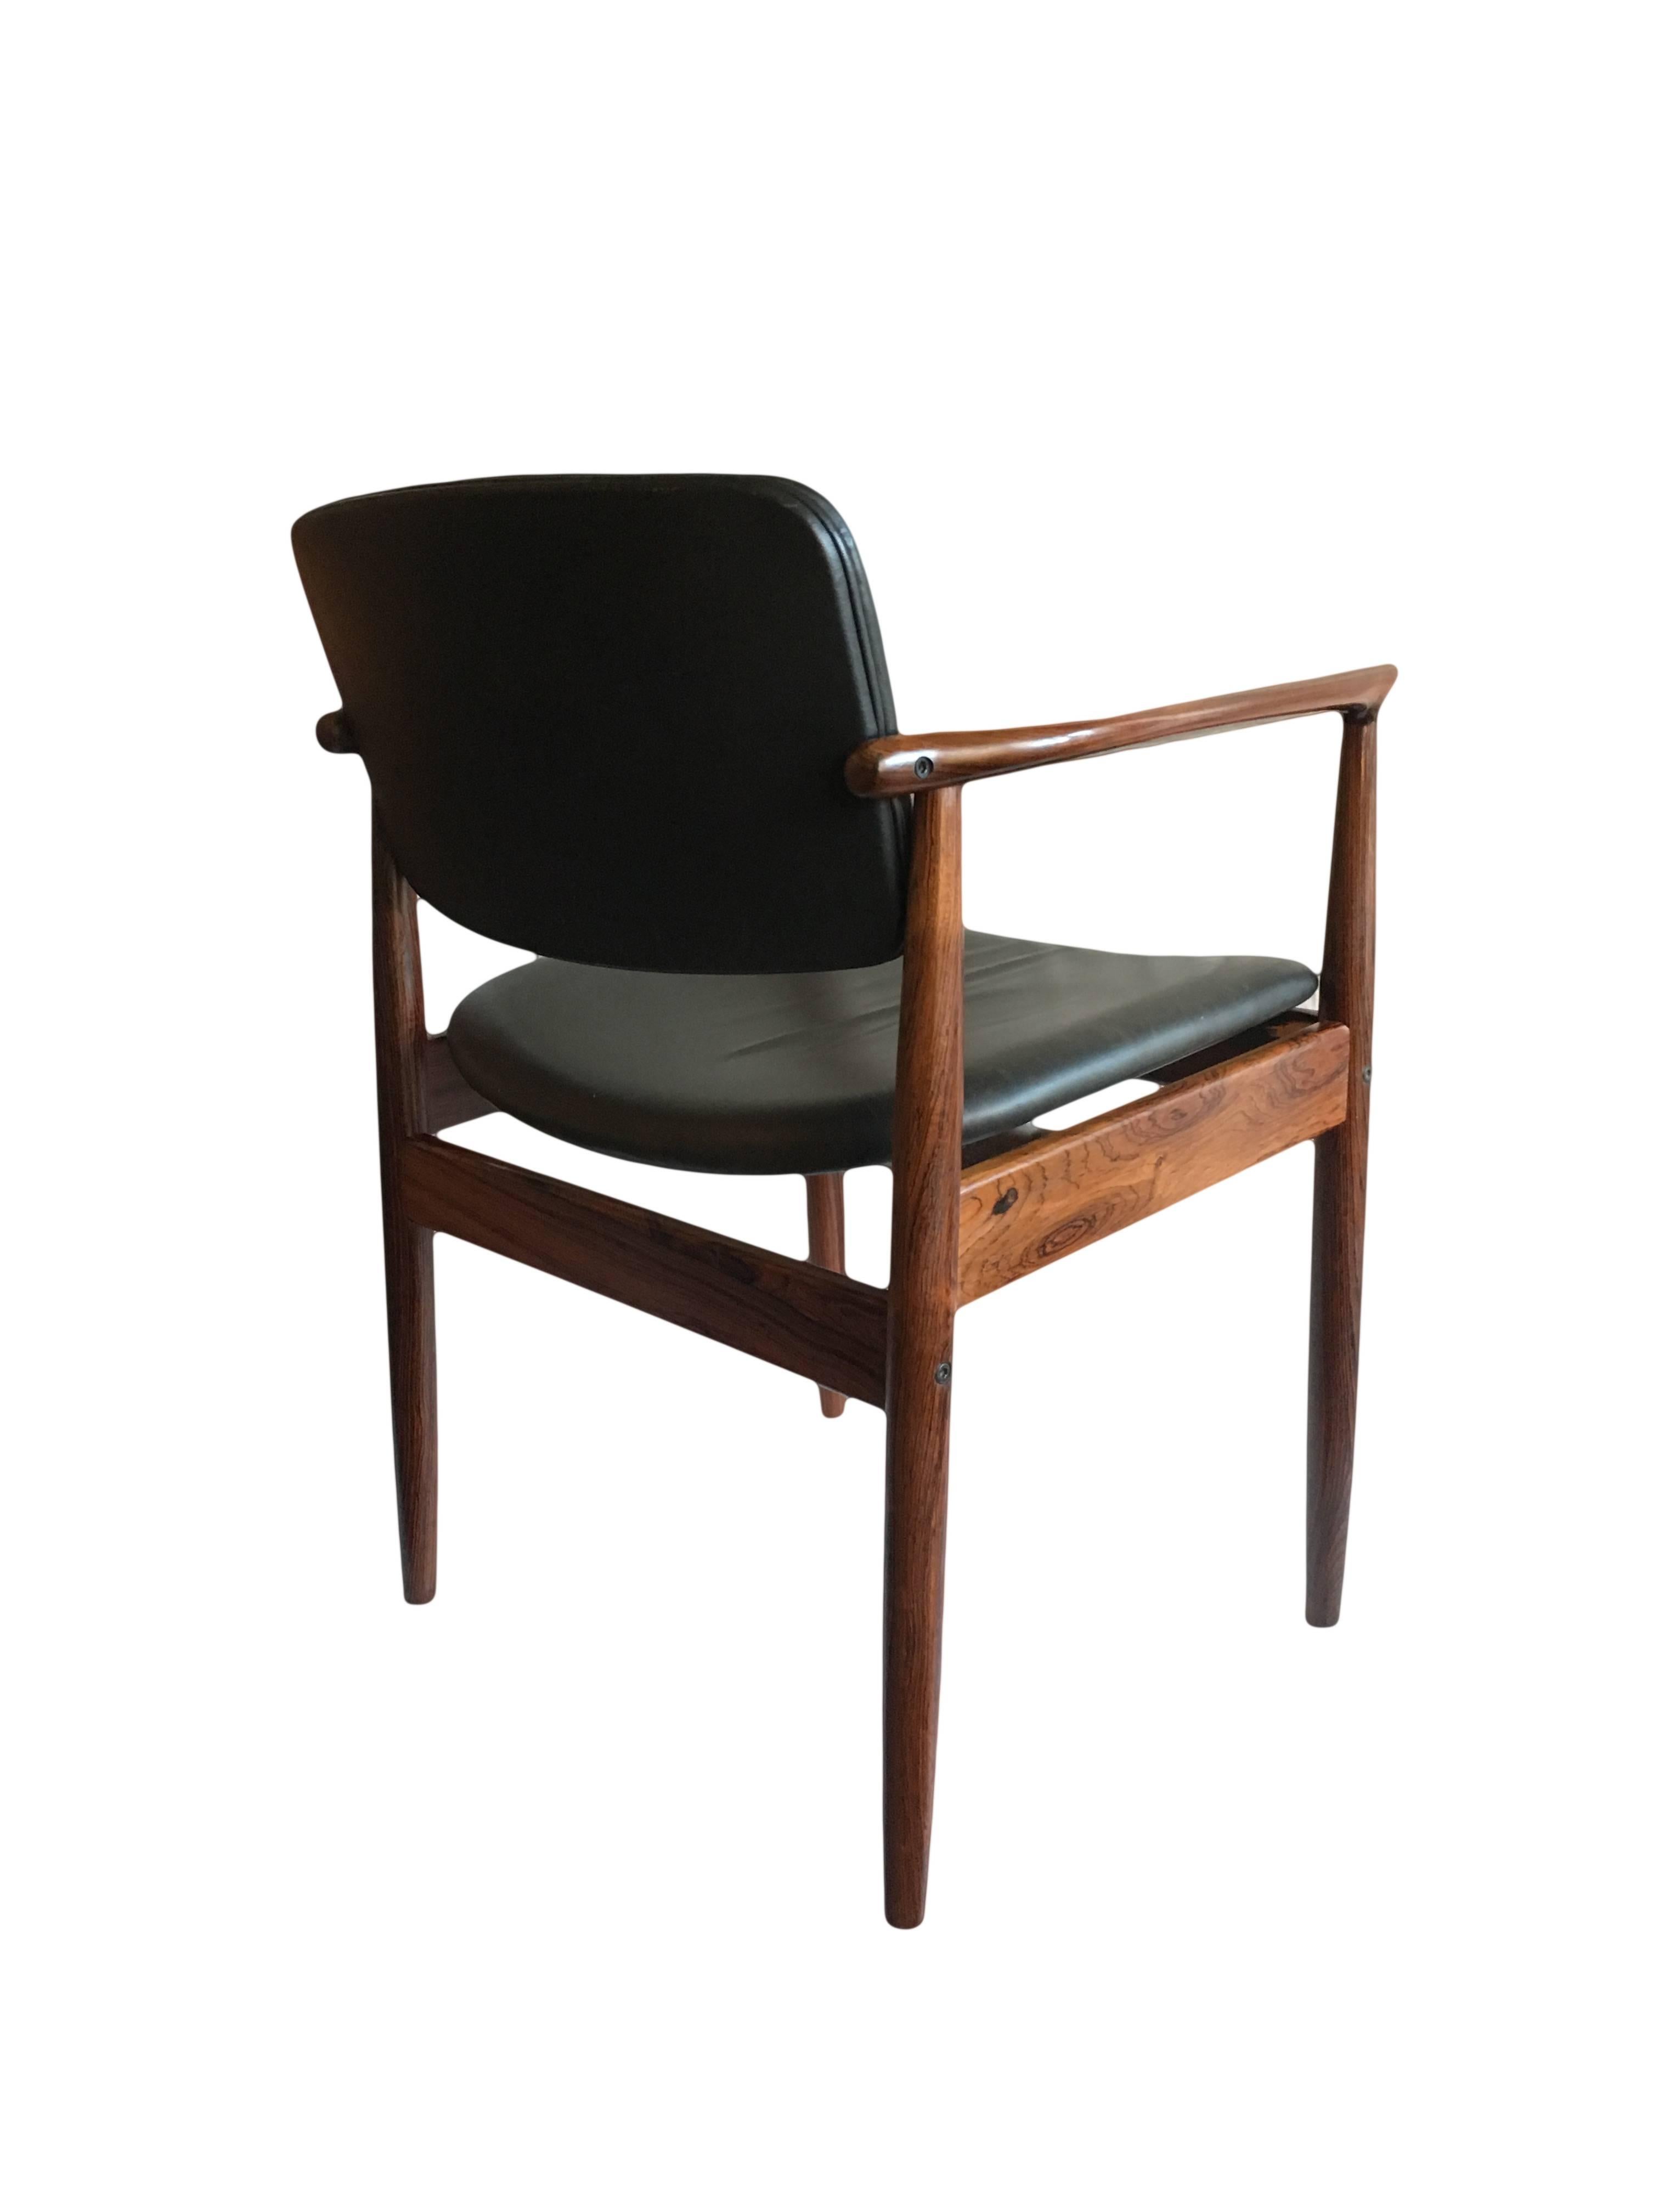 20th Century Danish Farsø Stolefabrik Desk Chair